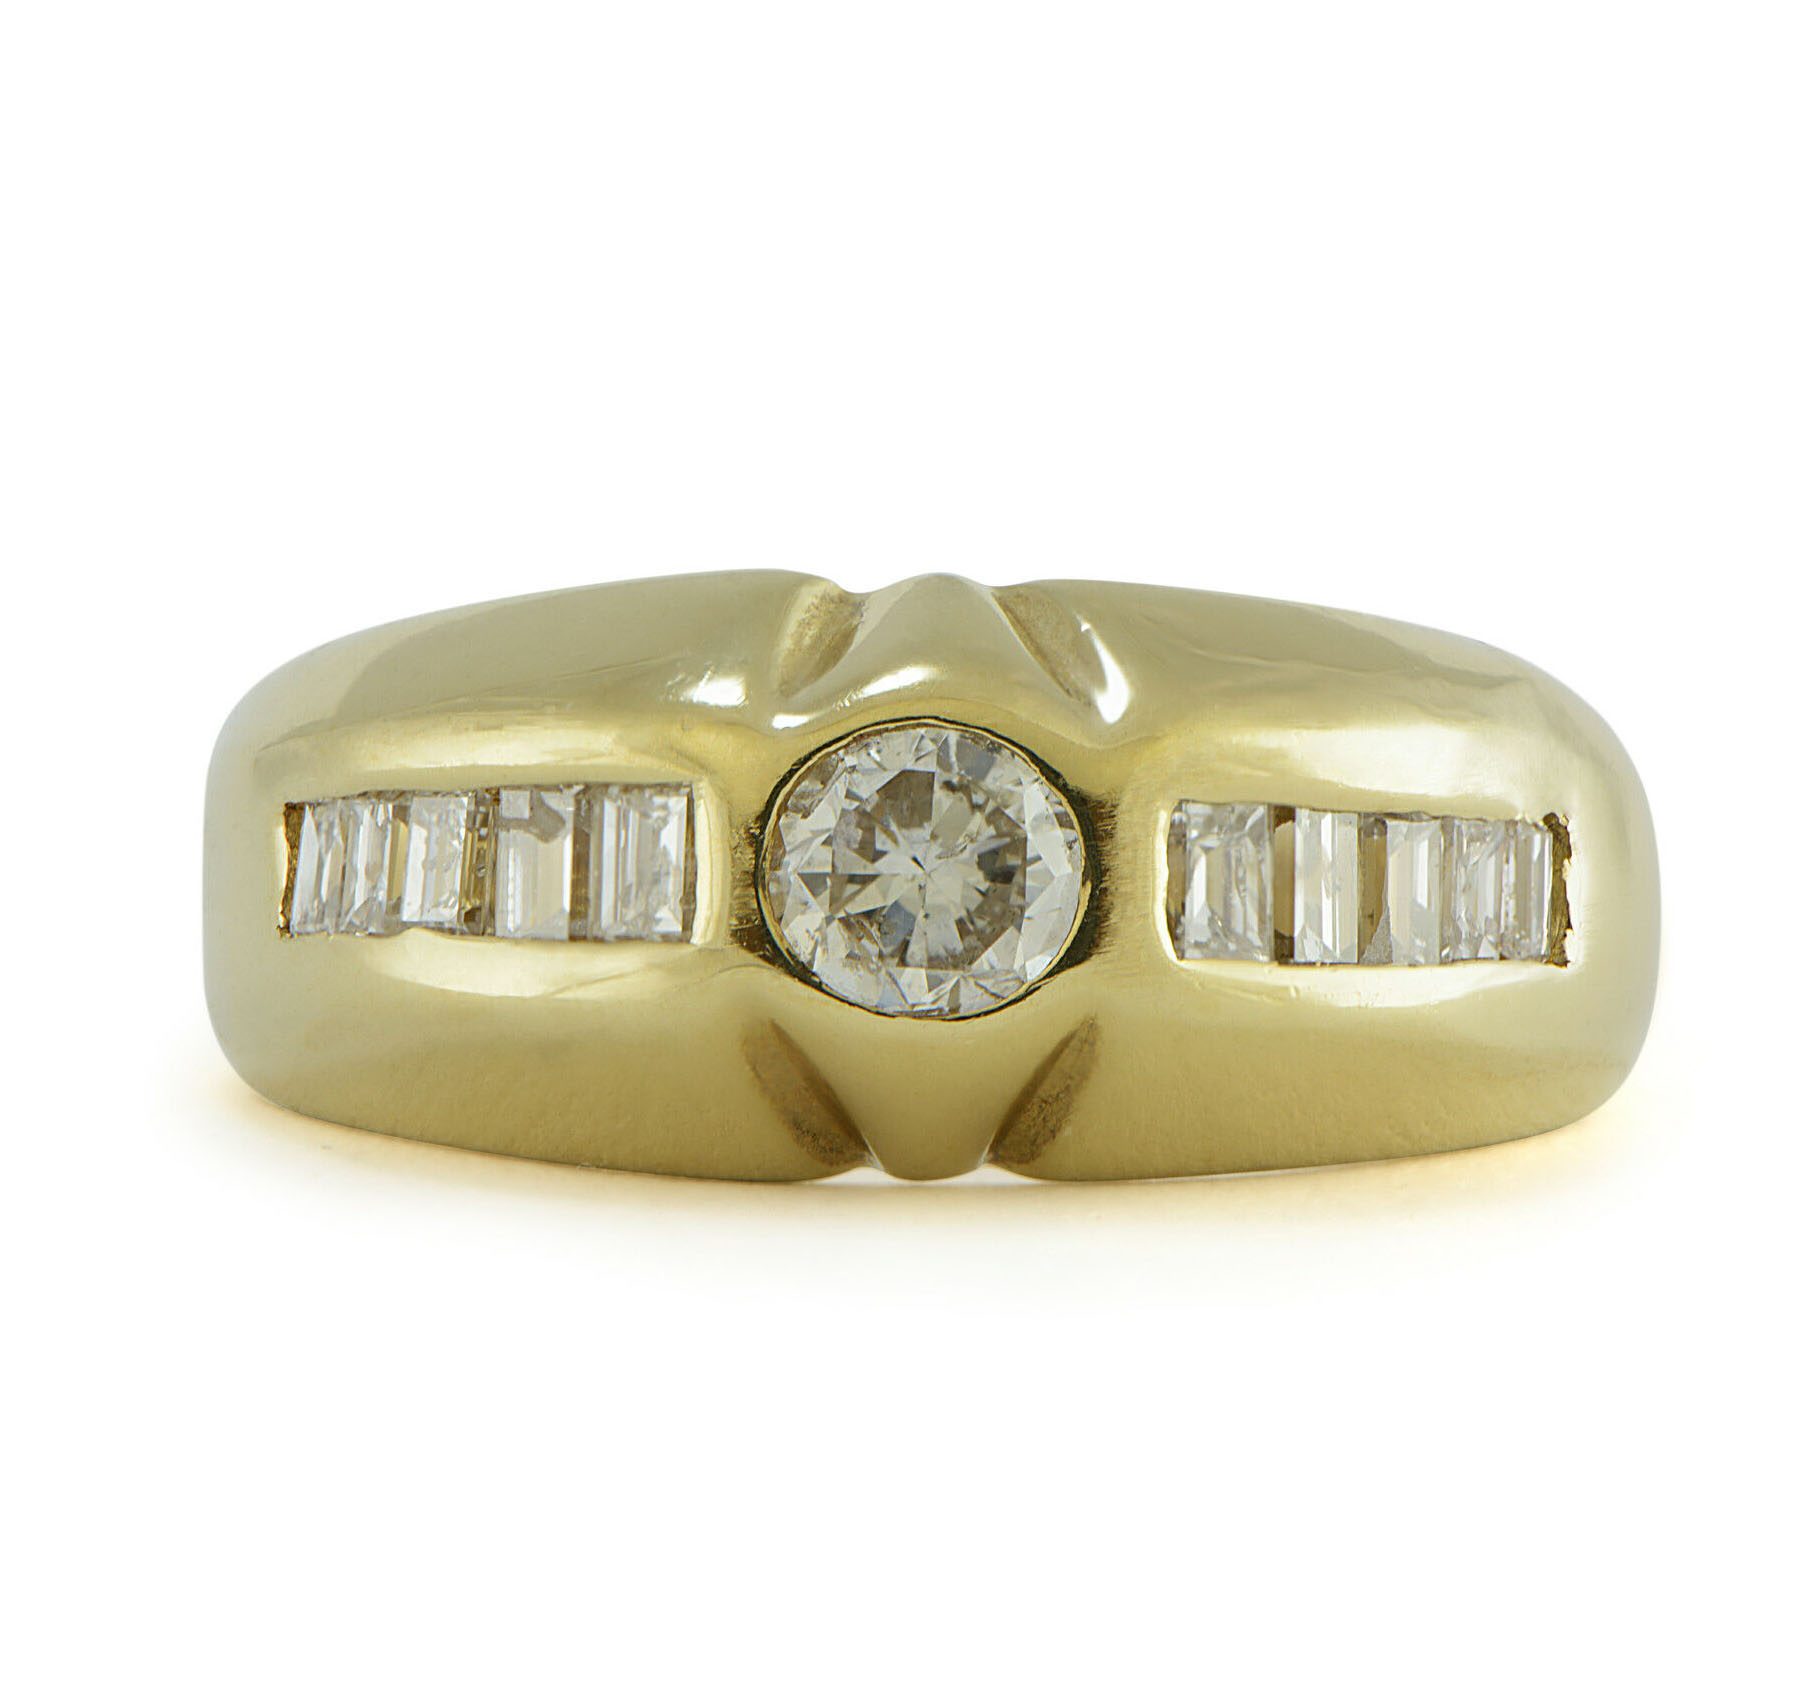 14k-Yellow-Gold-Ring-Round-Diamond-1ct-TW-SZ-8-Unisex-HSI-Channel-Set-Baguette-112454231630